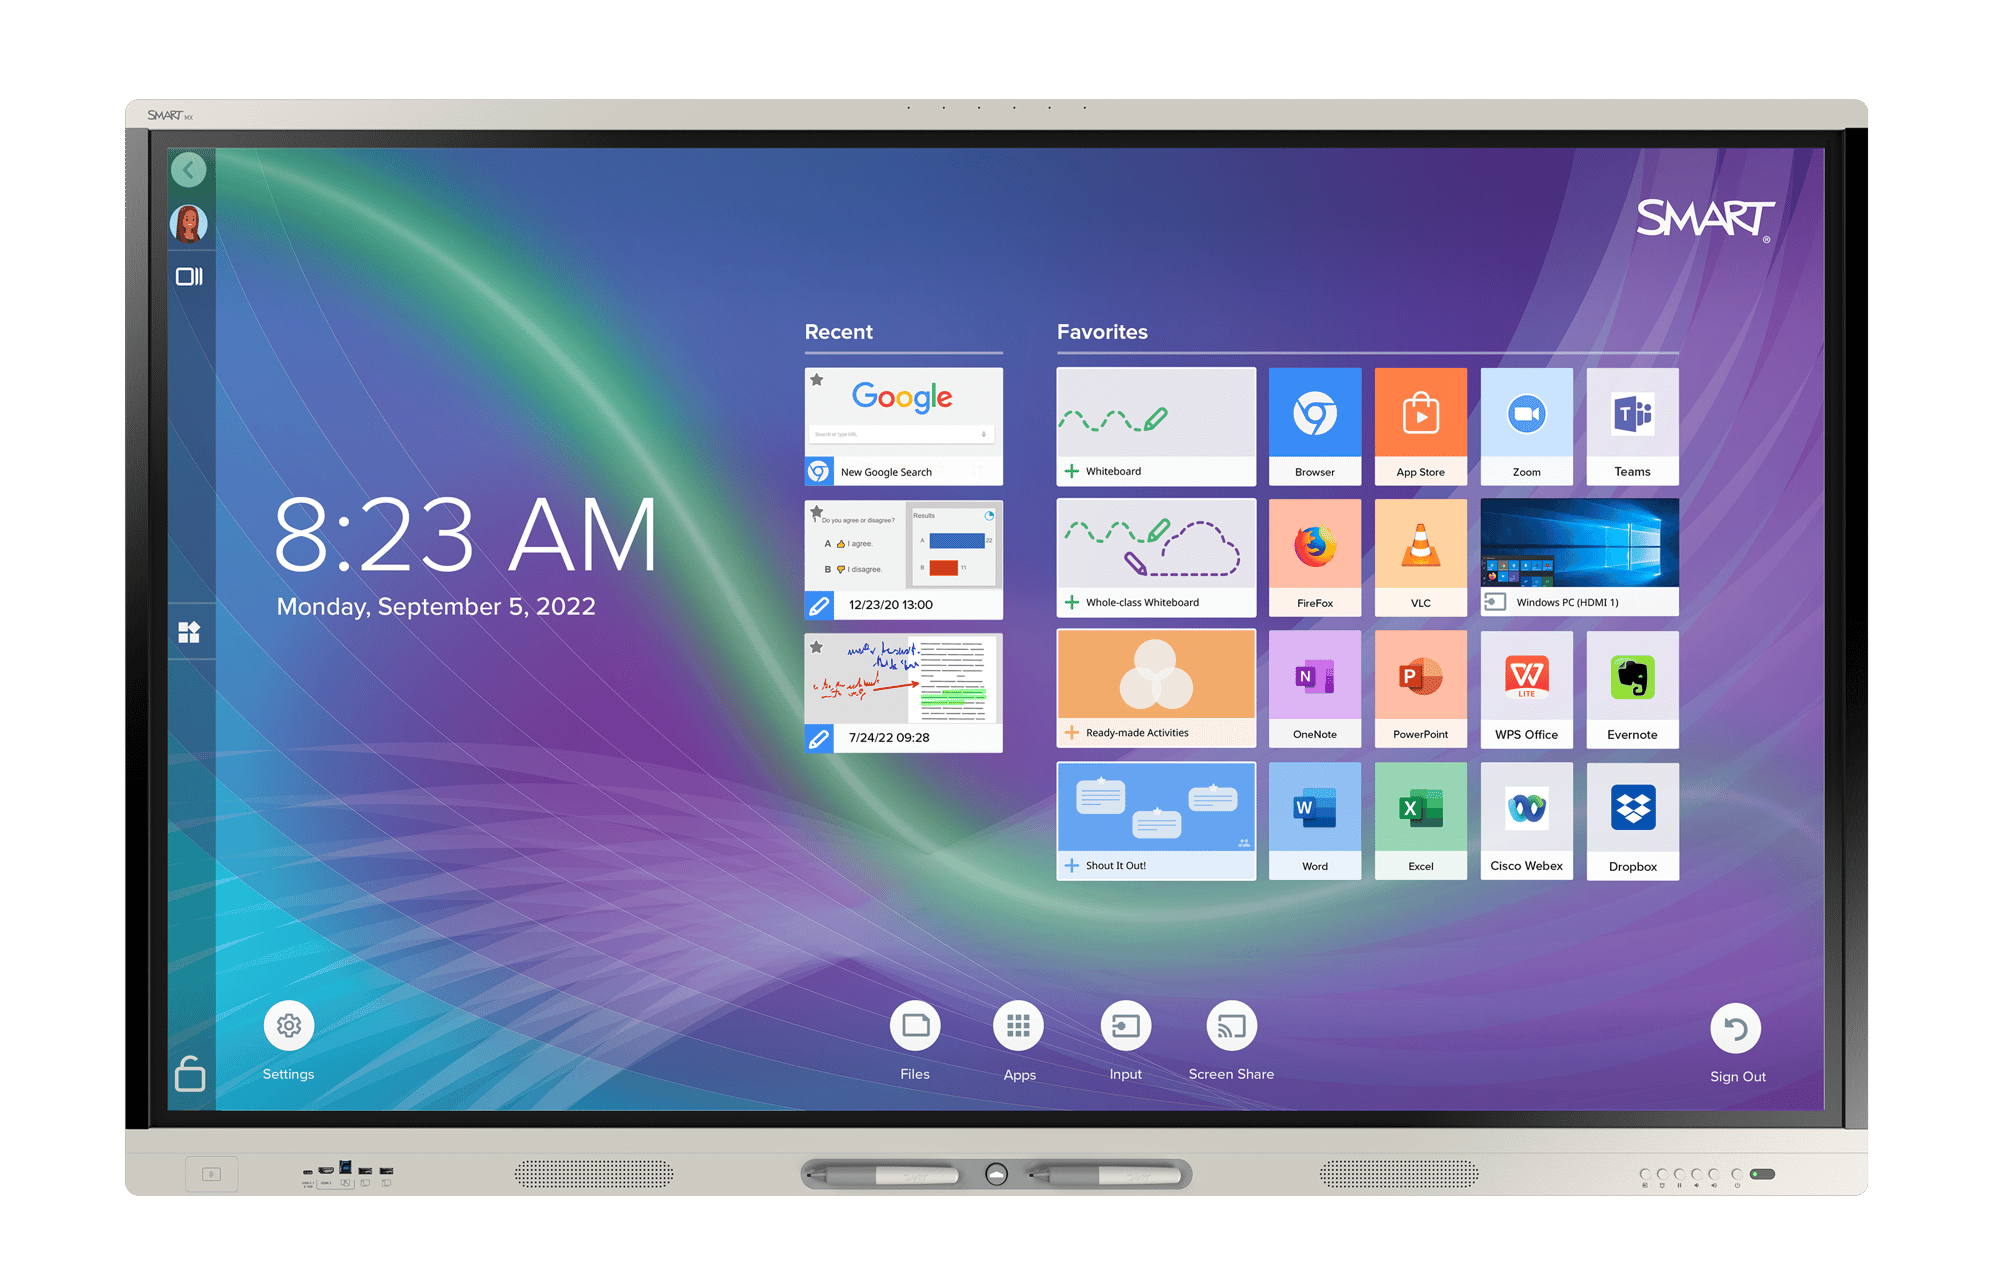 MX-V4- ED - iQ - default home screen - FRONT